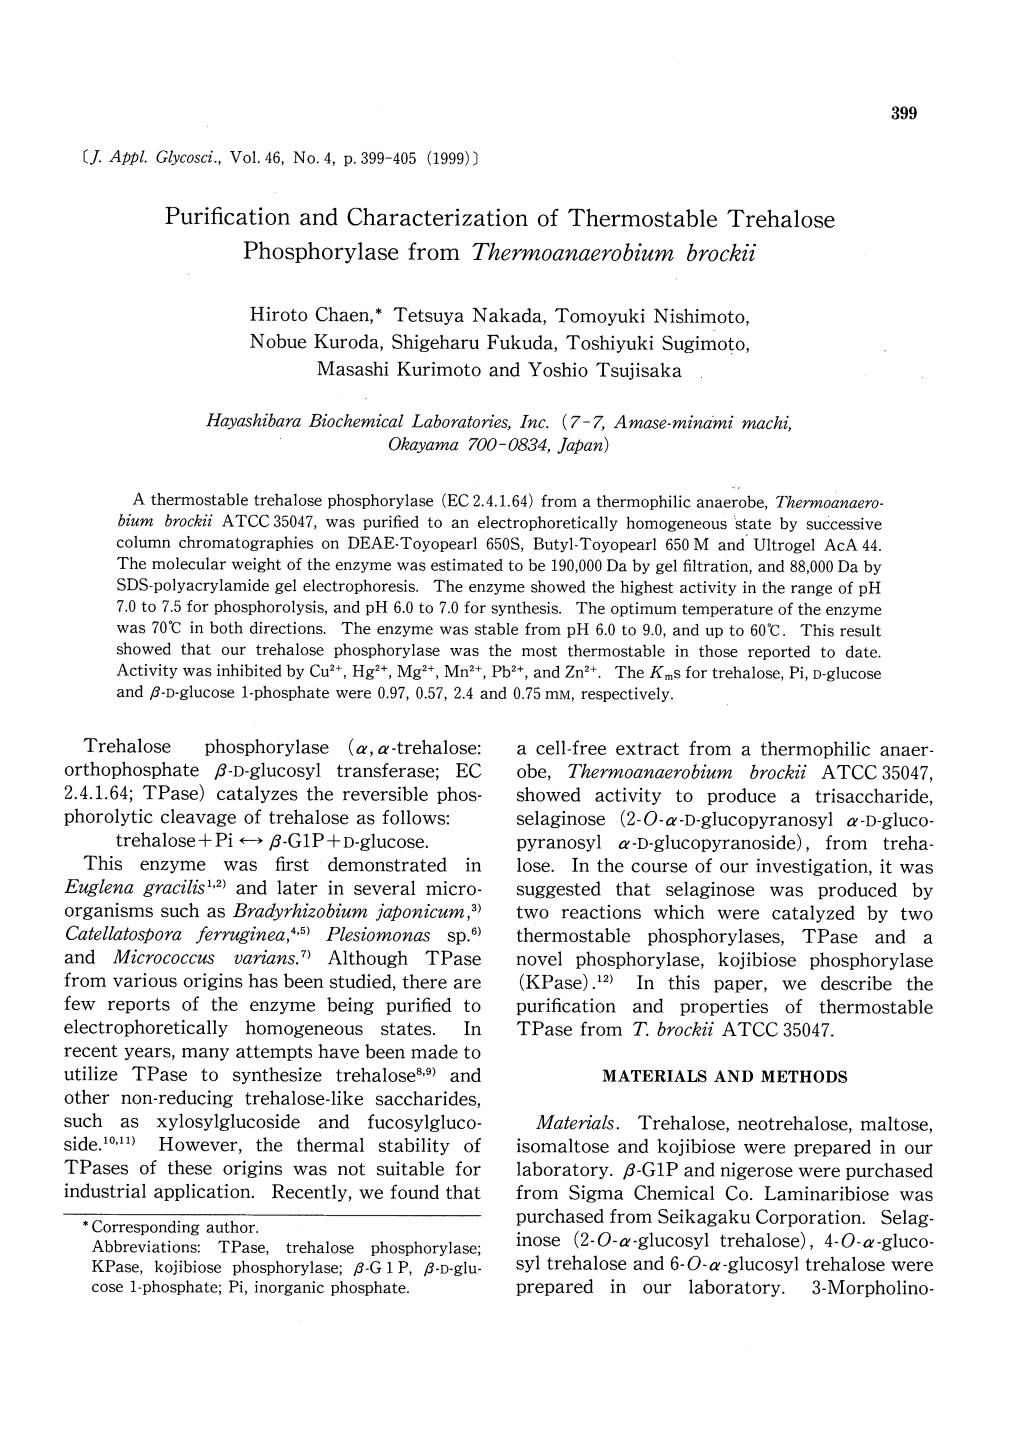 Purification and Characterization of Thermostable Trehalose Phosphorylase from Theymoanaeyobium Brockii